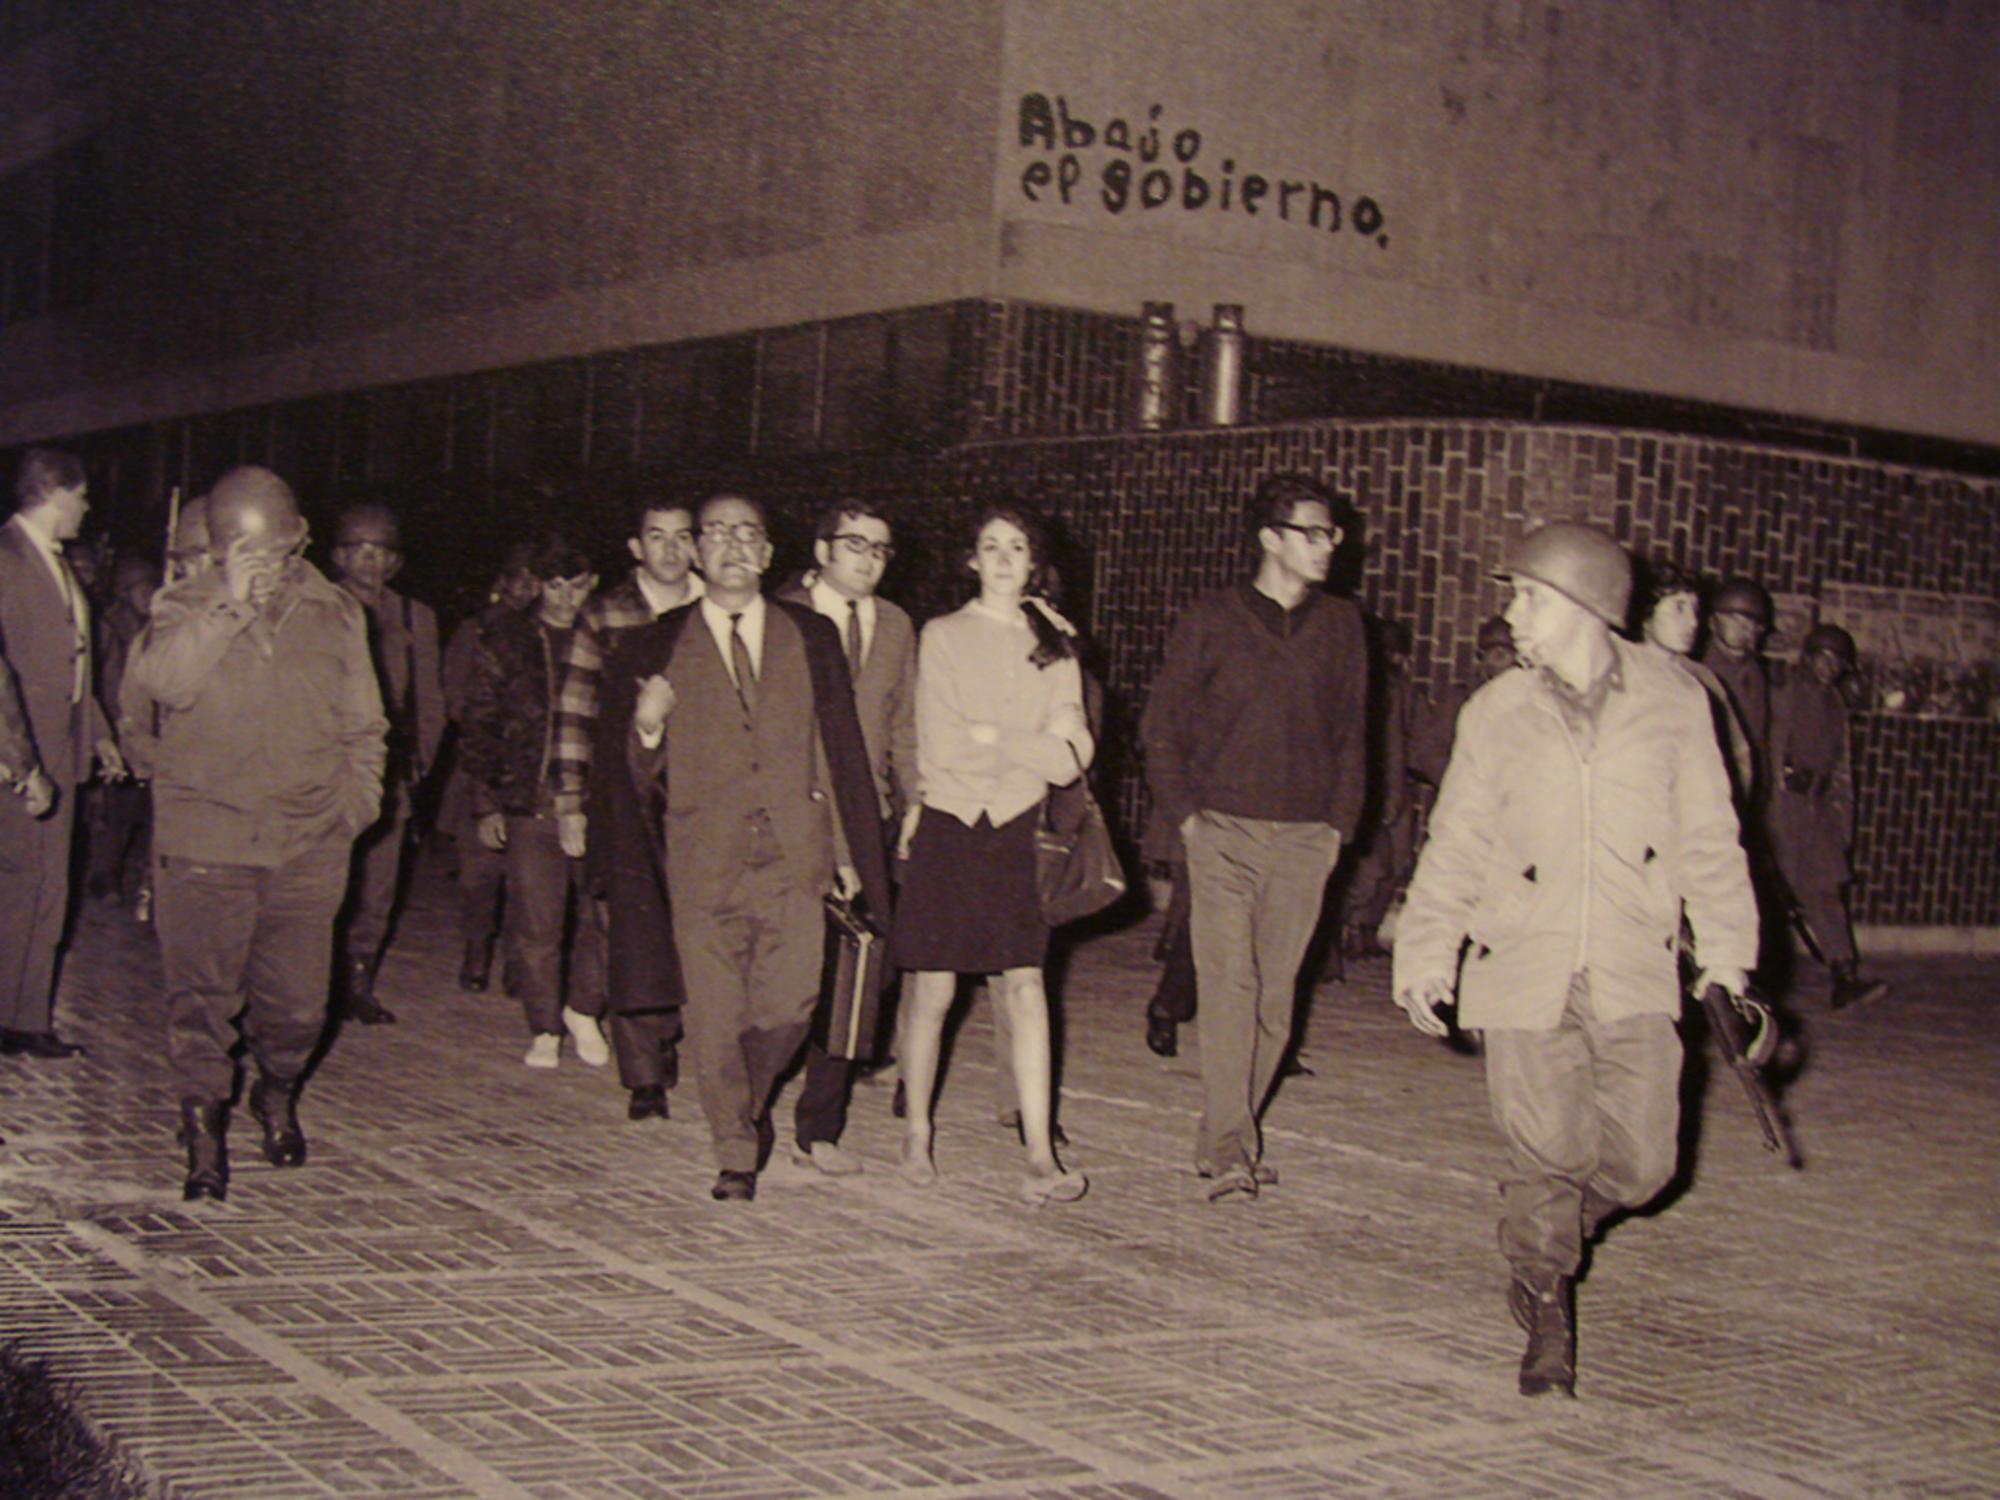 Tlatelolco 1968